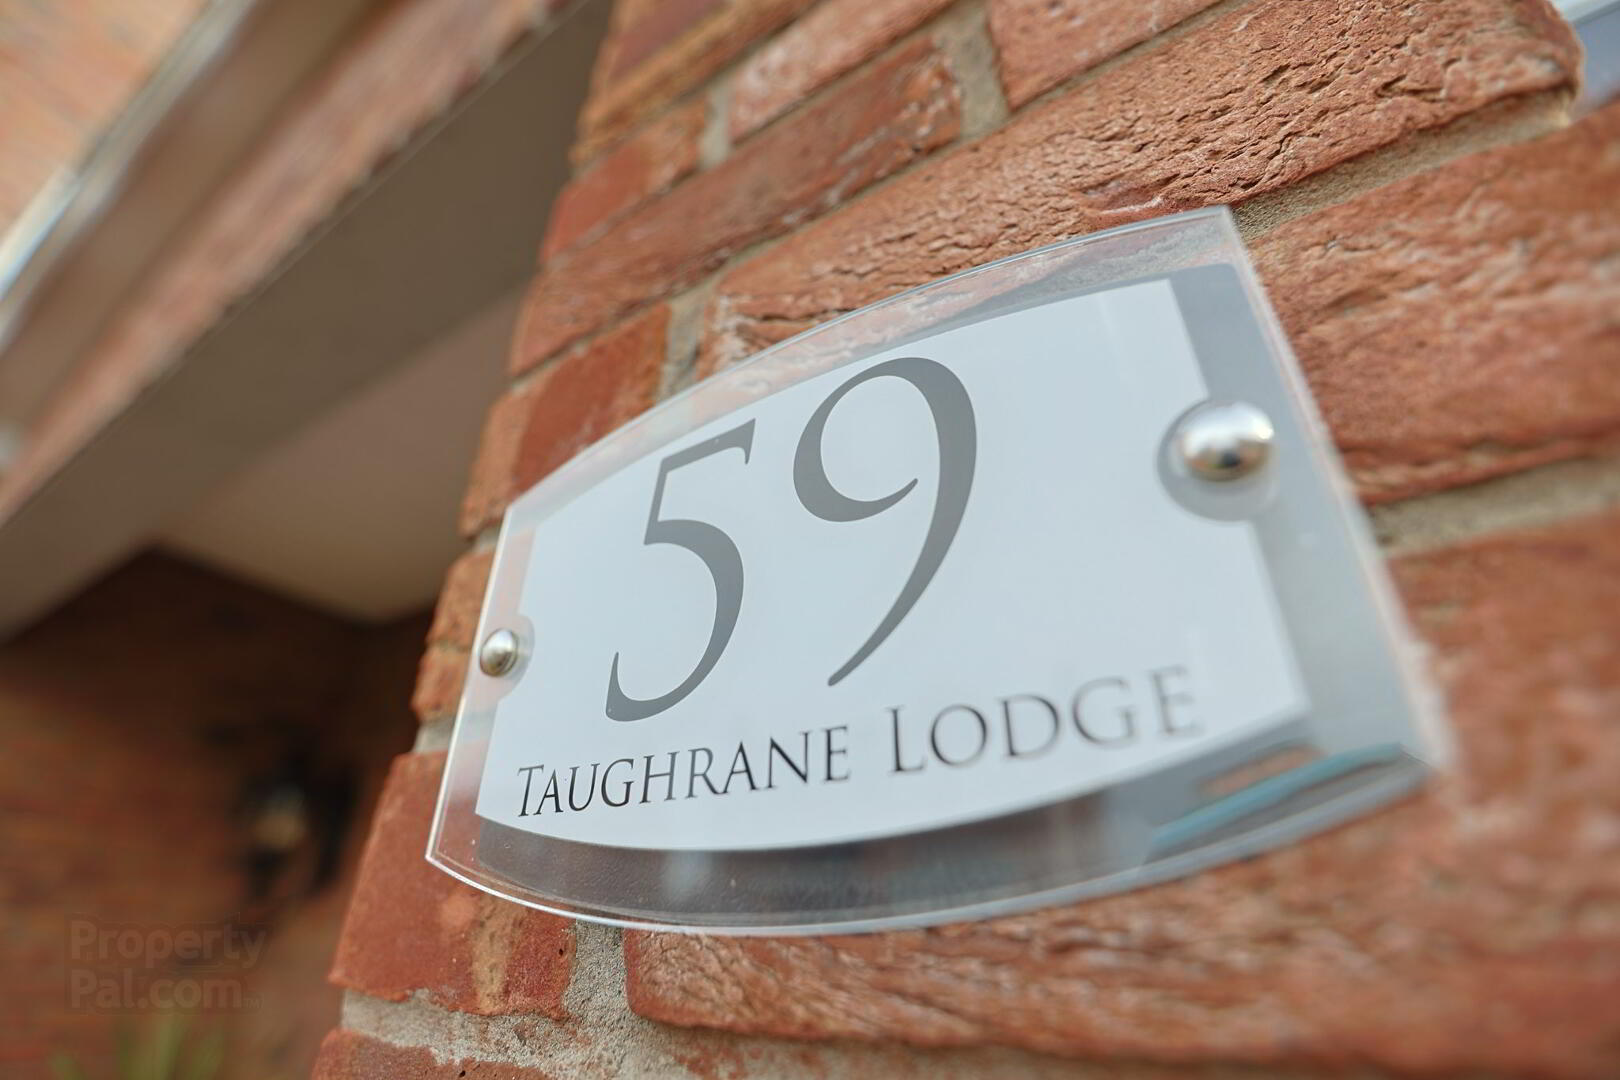 59 Taughrane Lodge